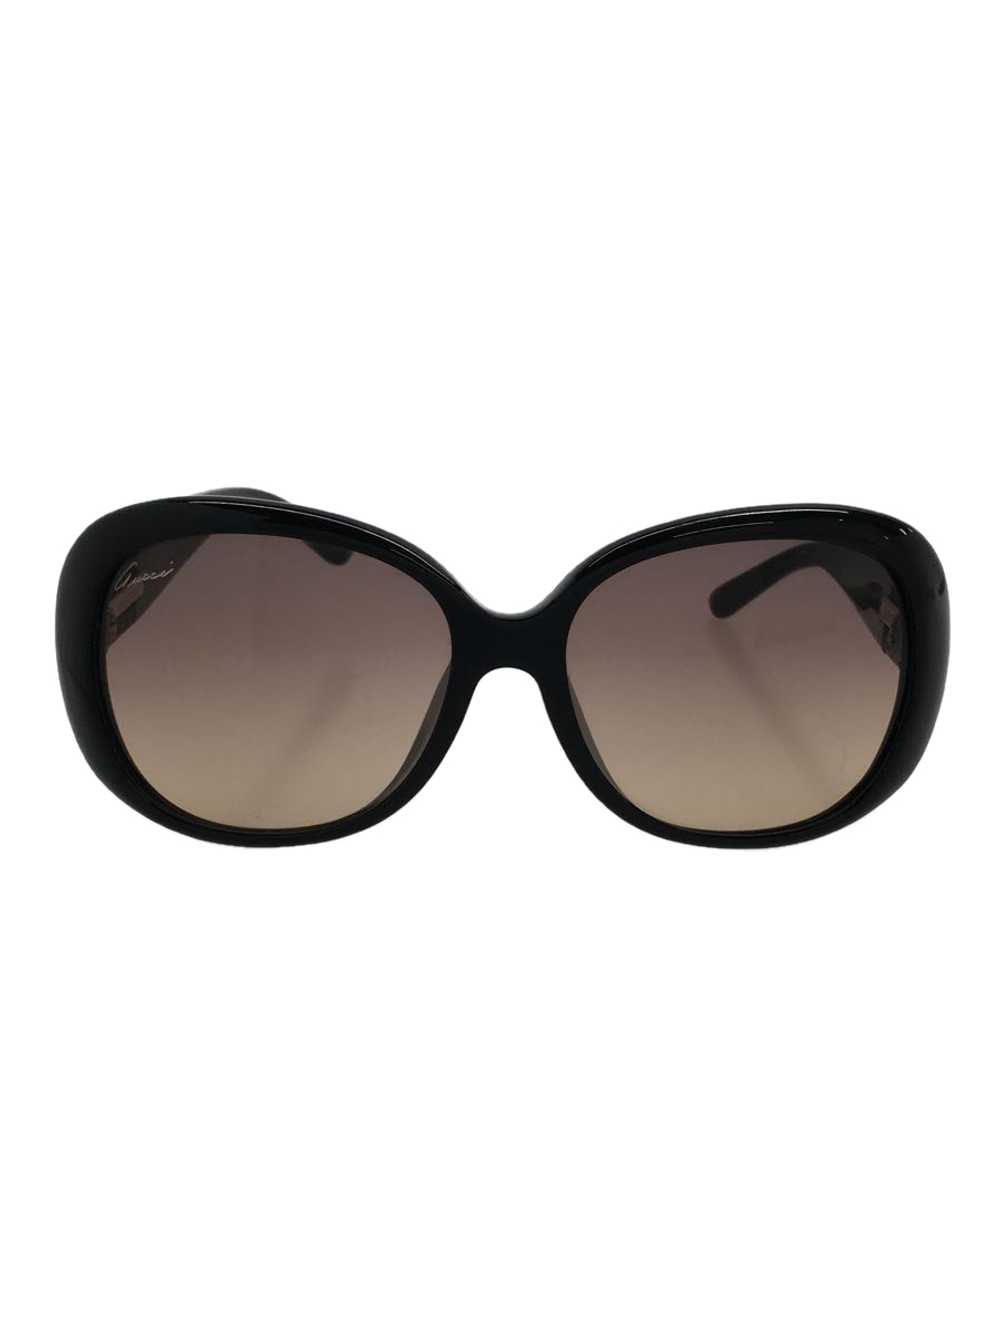 Used Gucci Sunglasses/Plastic/Black/Ladies/Gg3660 - image 1